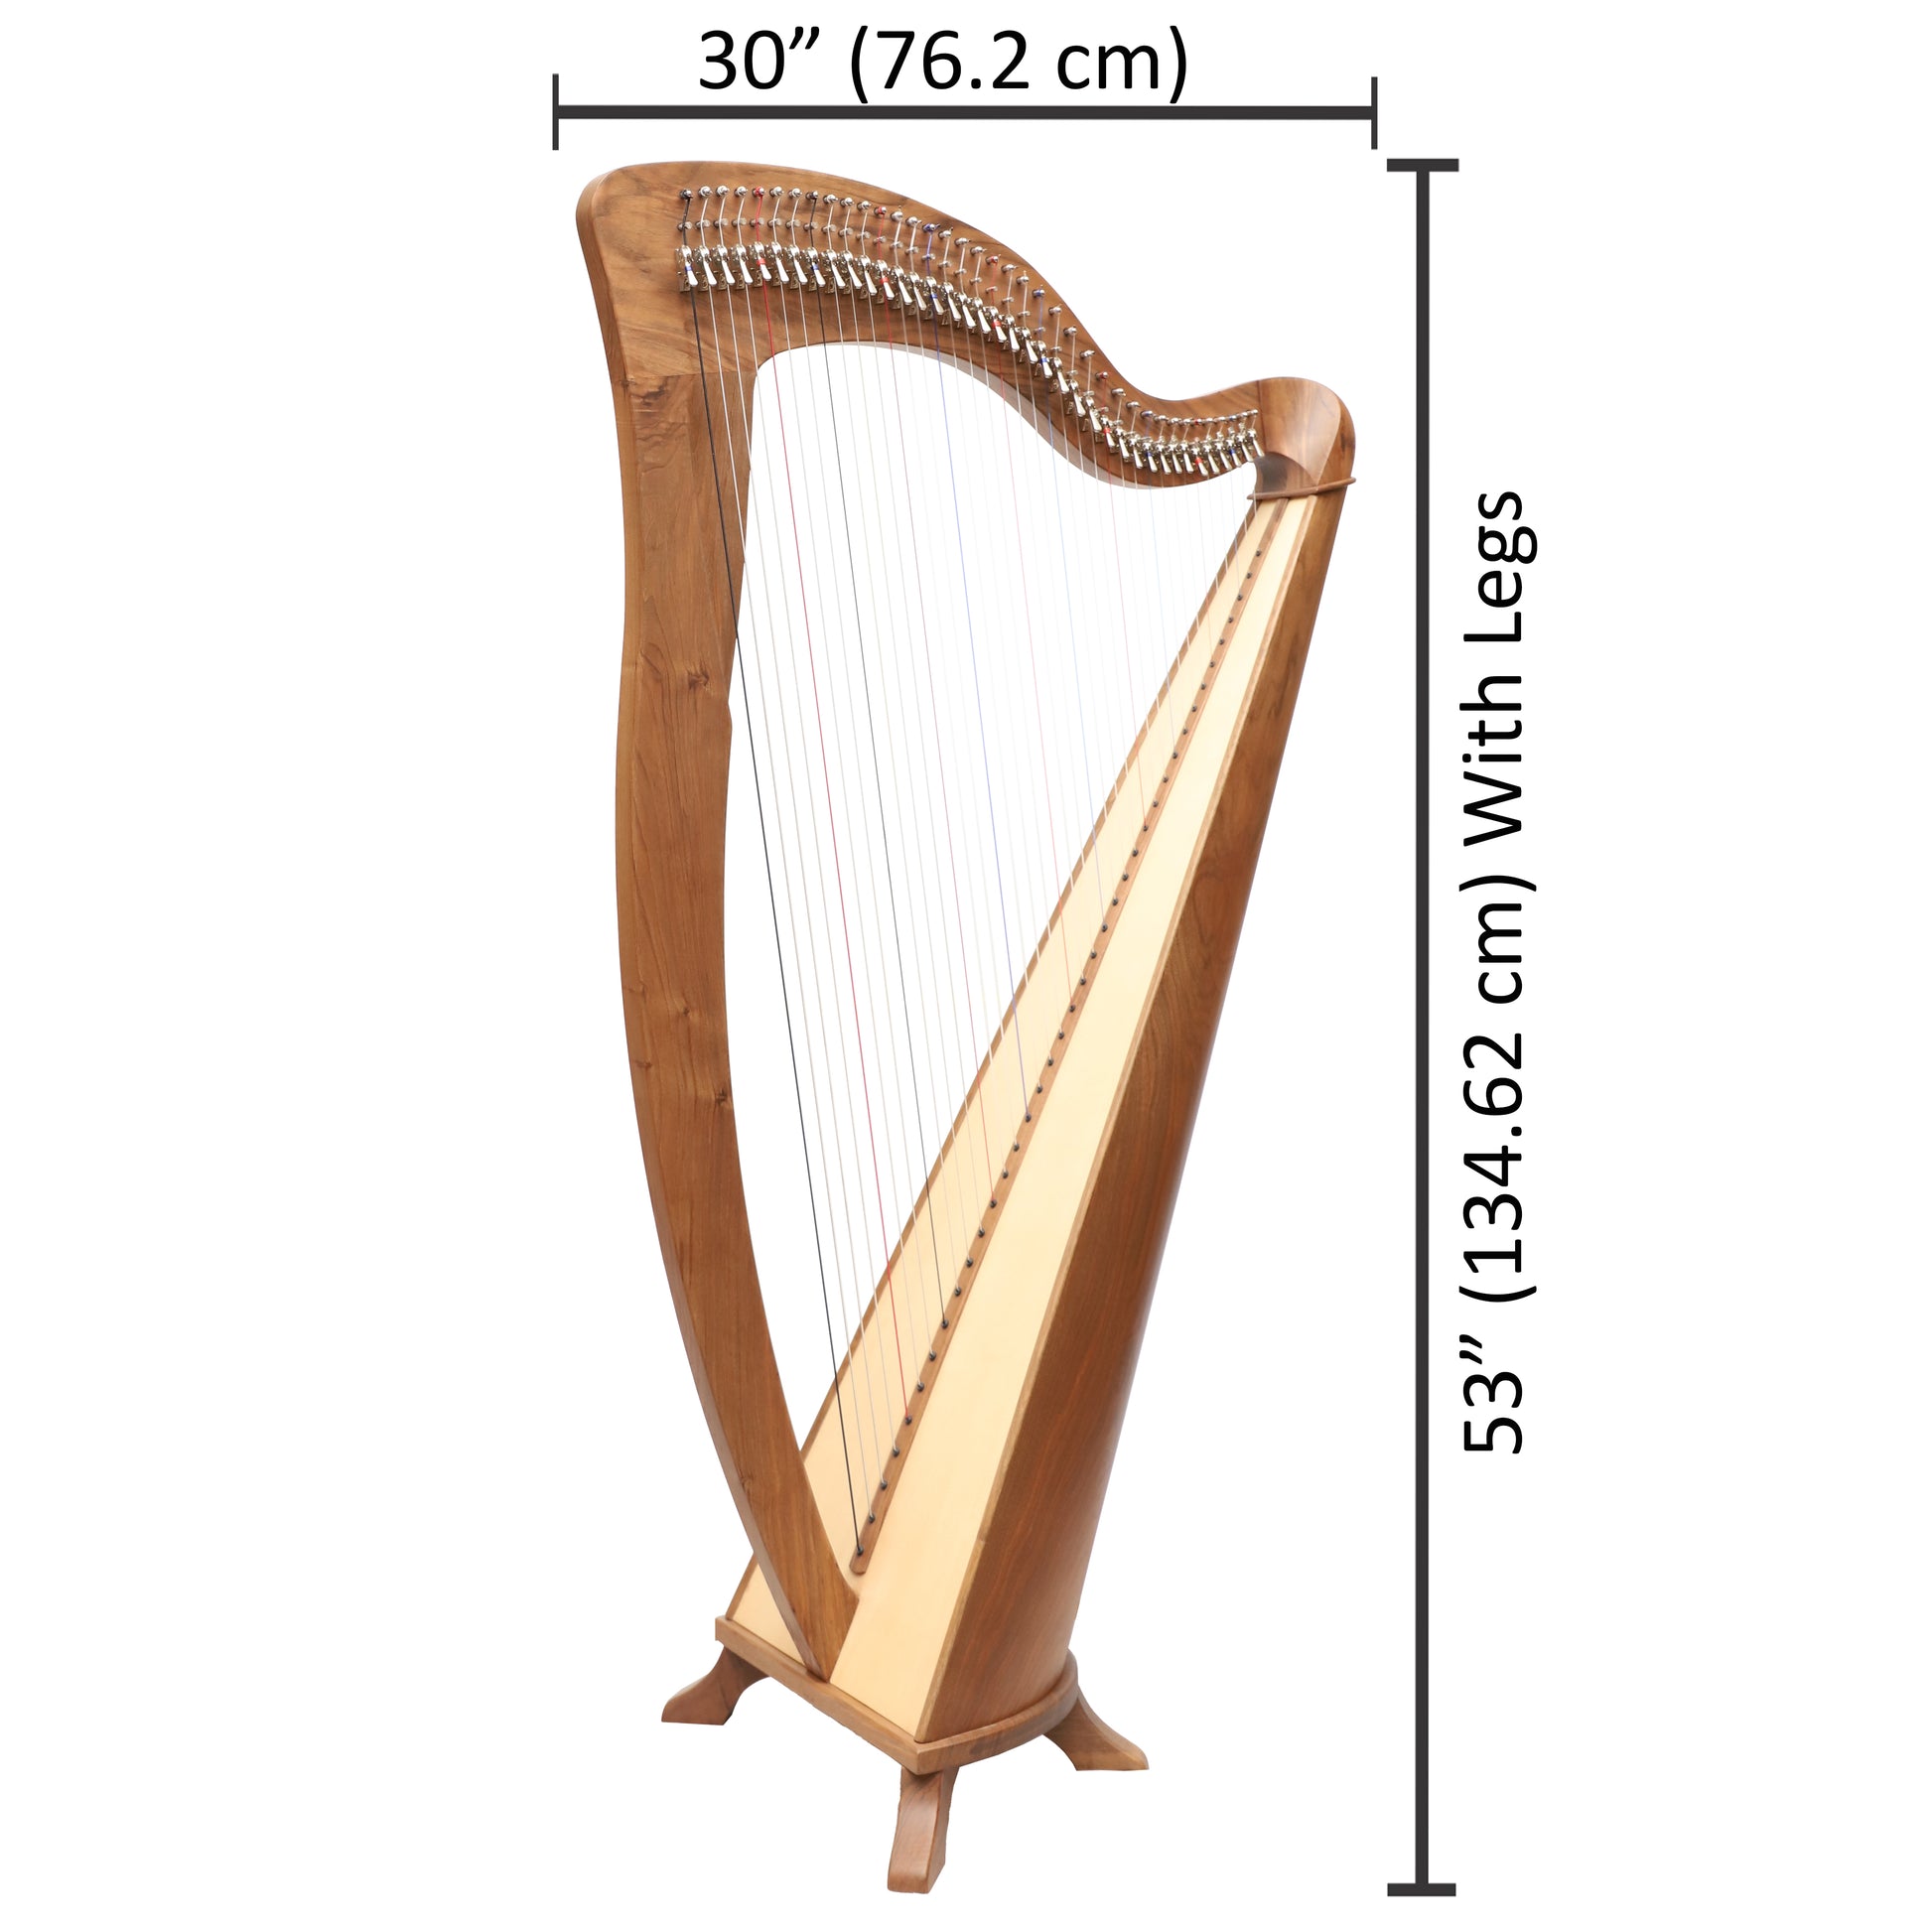 McHugh Harp 38 Strings Walnut Wood Round Back Muzikkon